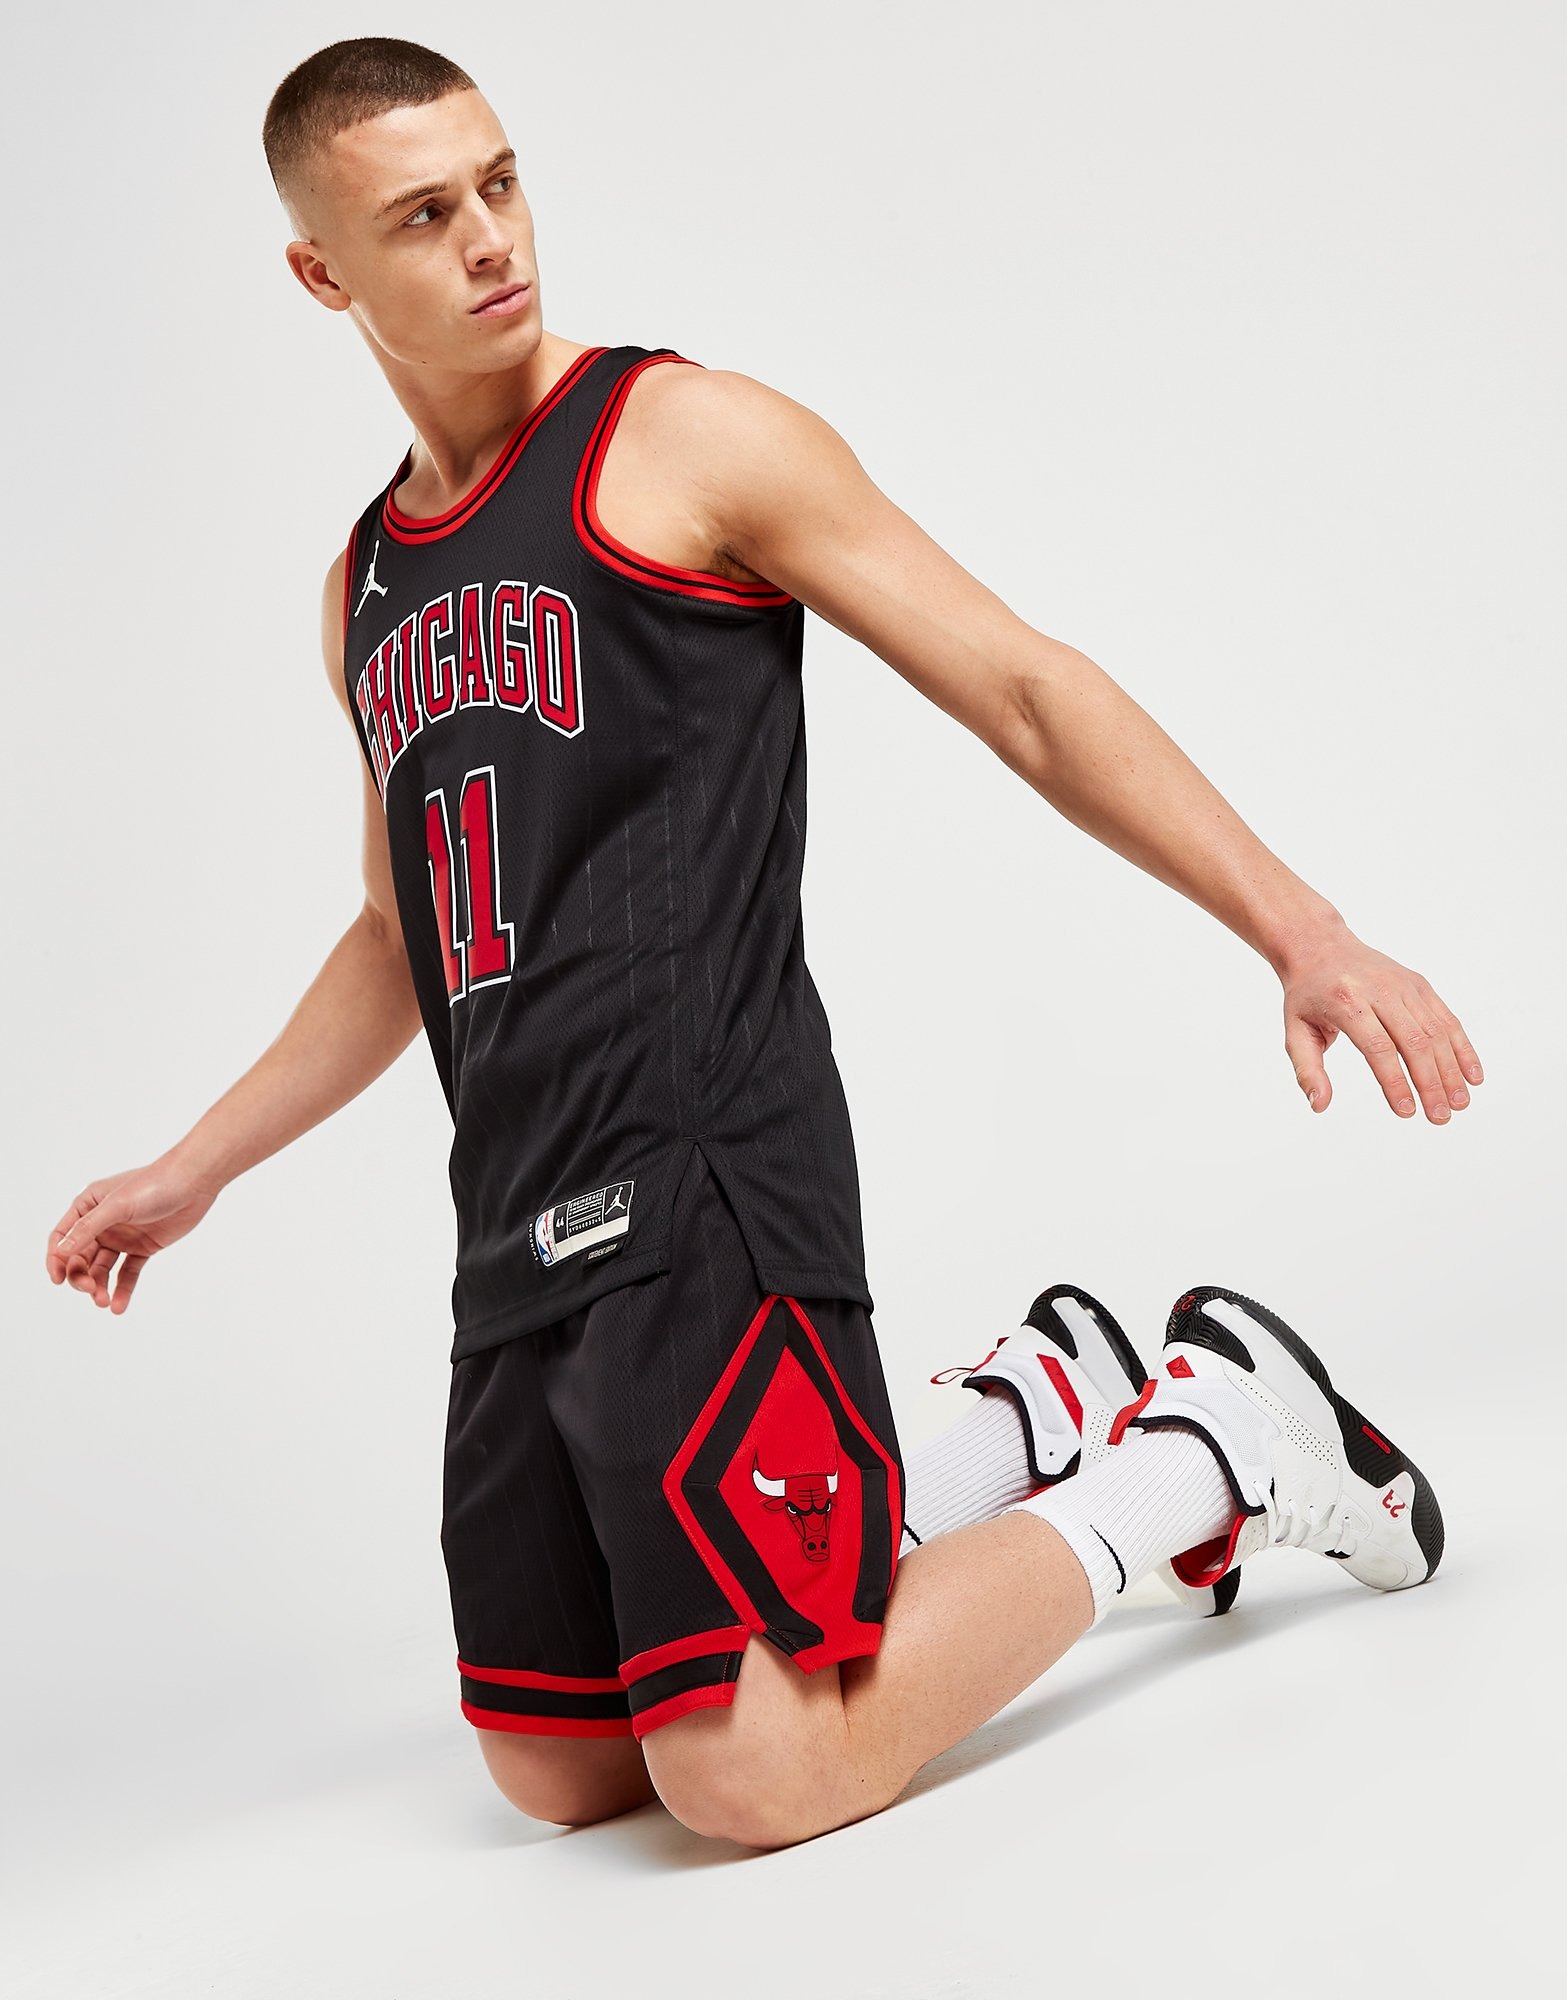 Chicago Bulls Jordan 45 men's nba basketball swingman jersey black red  edition shirt 2021